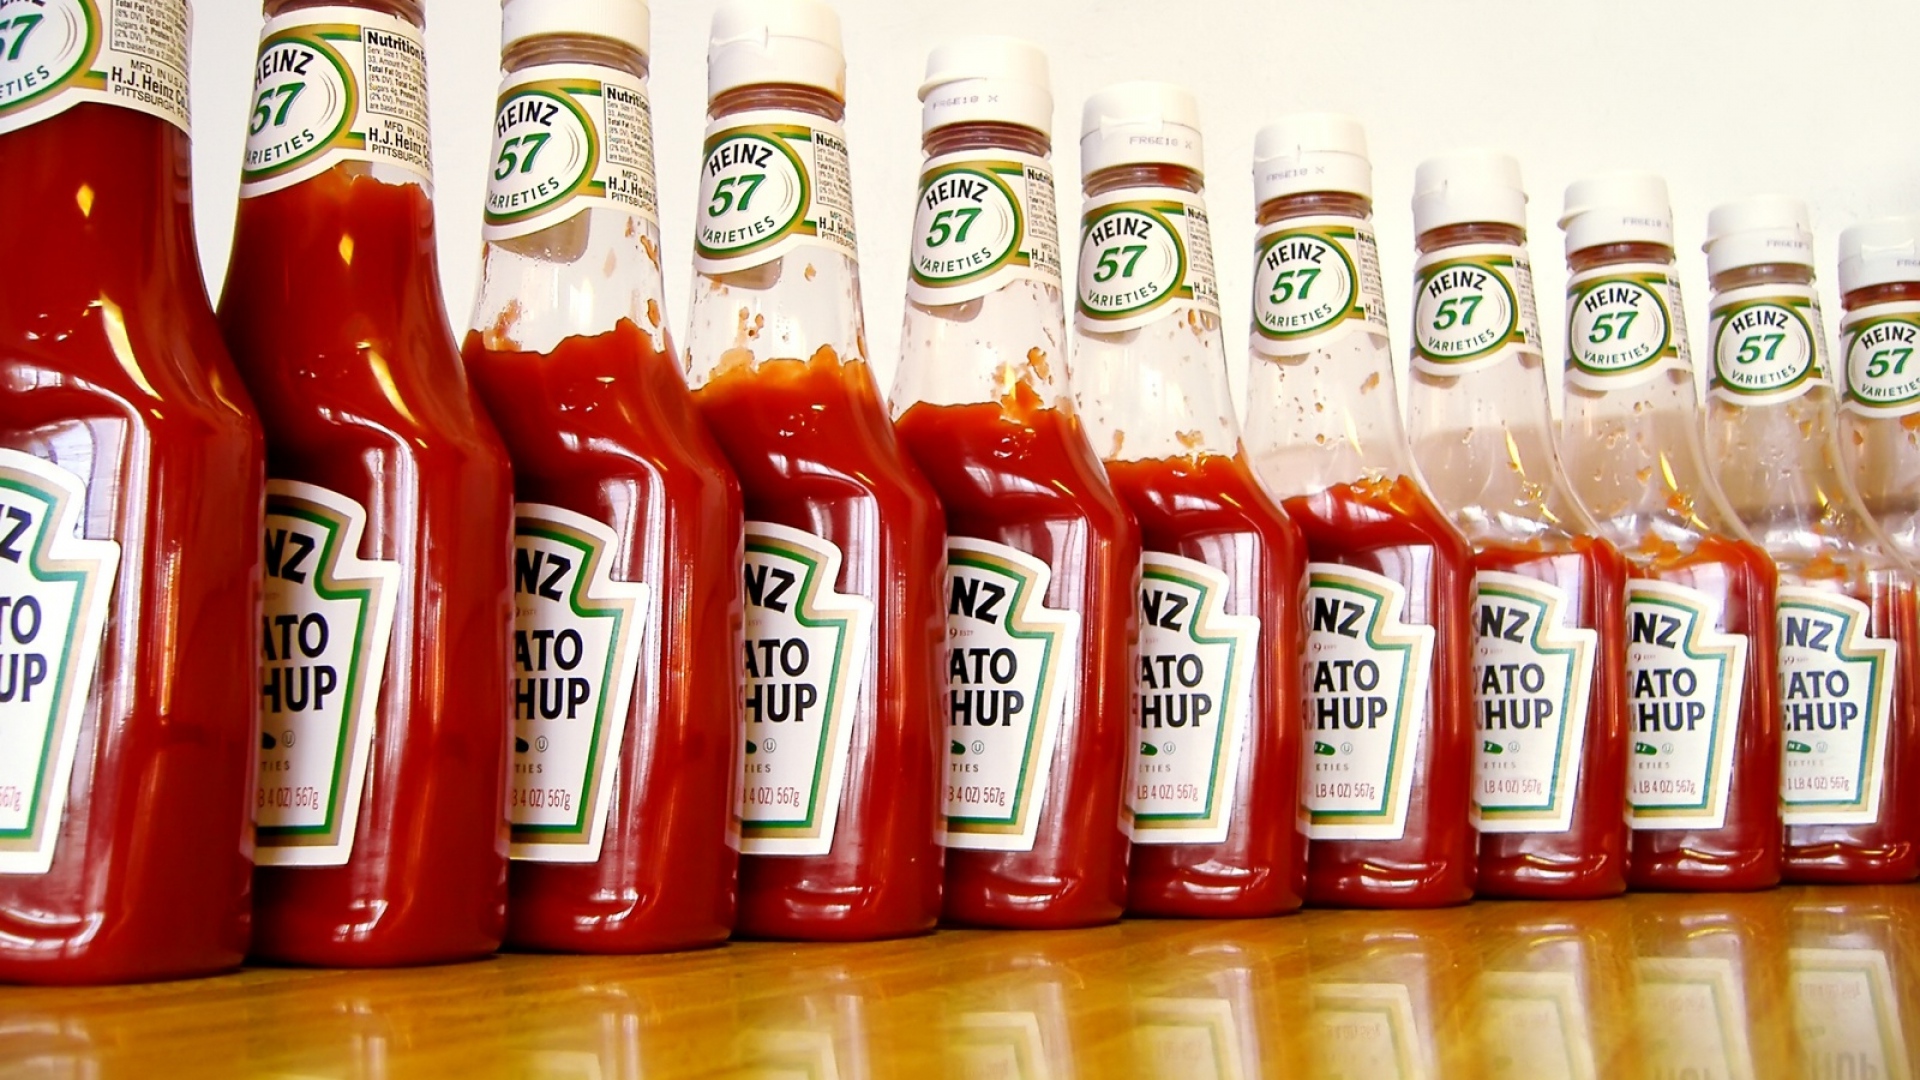 Heinz, Catsup, Firm - Lot Of Ketchup Bottles , HD Wallpaper & Backgrounds